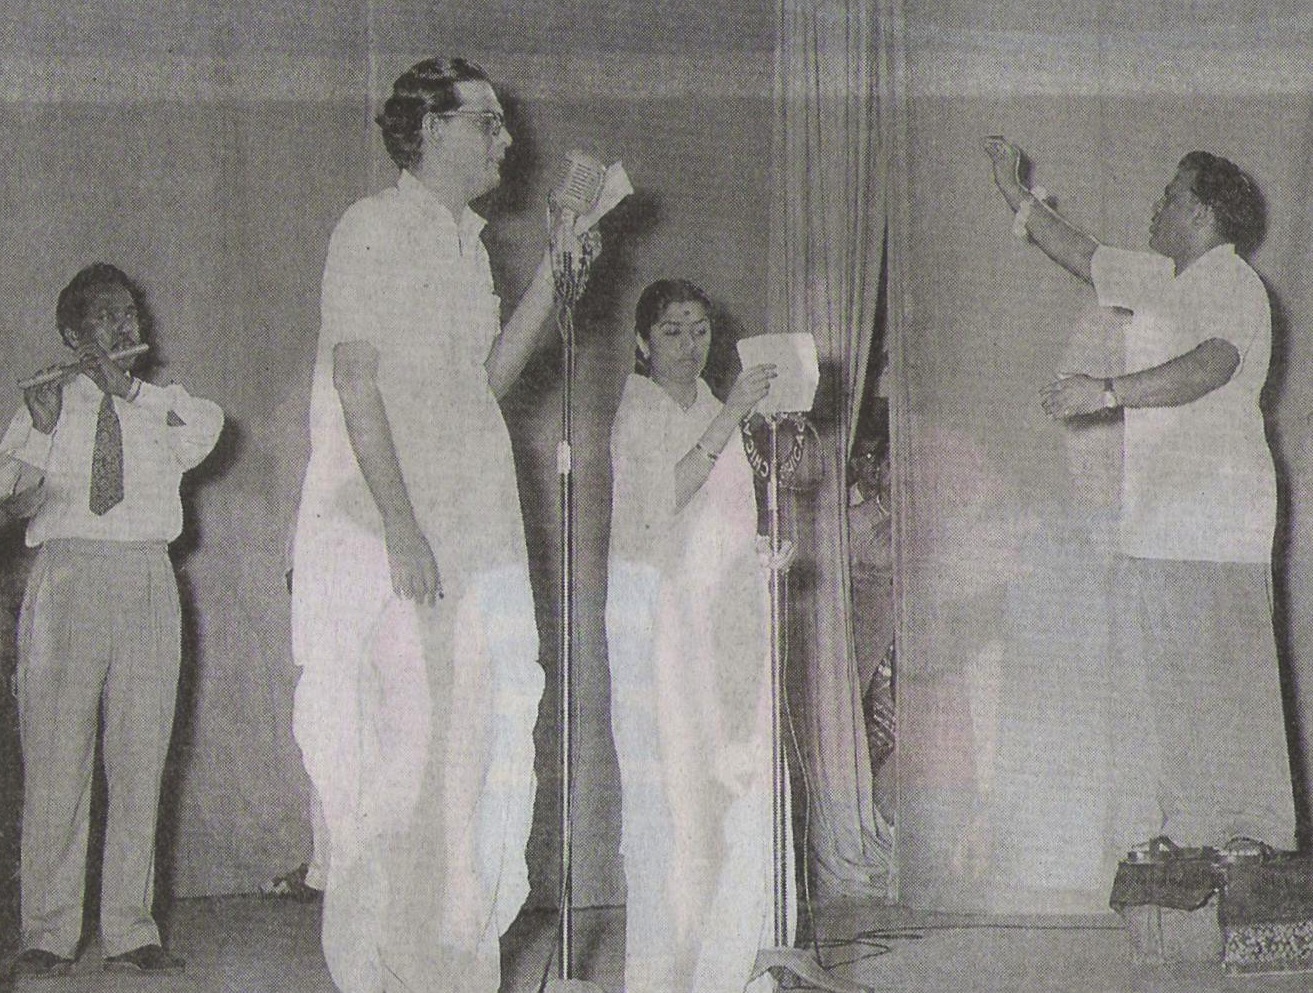 Hemant Kumar recording a song with Lata Mangeshkar (Pic courtesy: mrandmrs55.com)